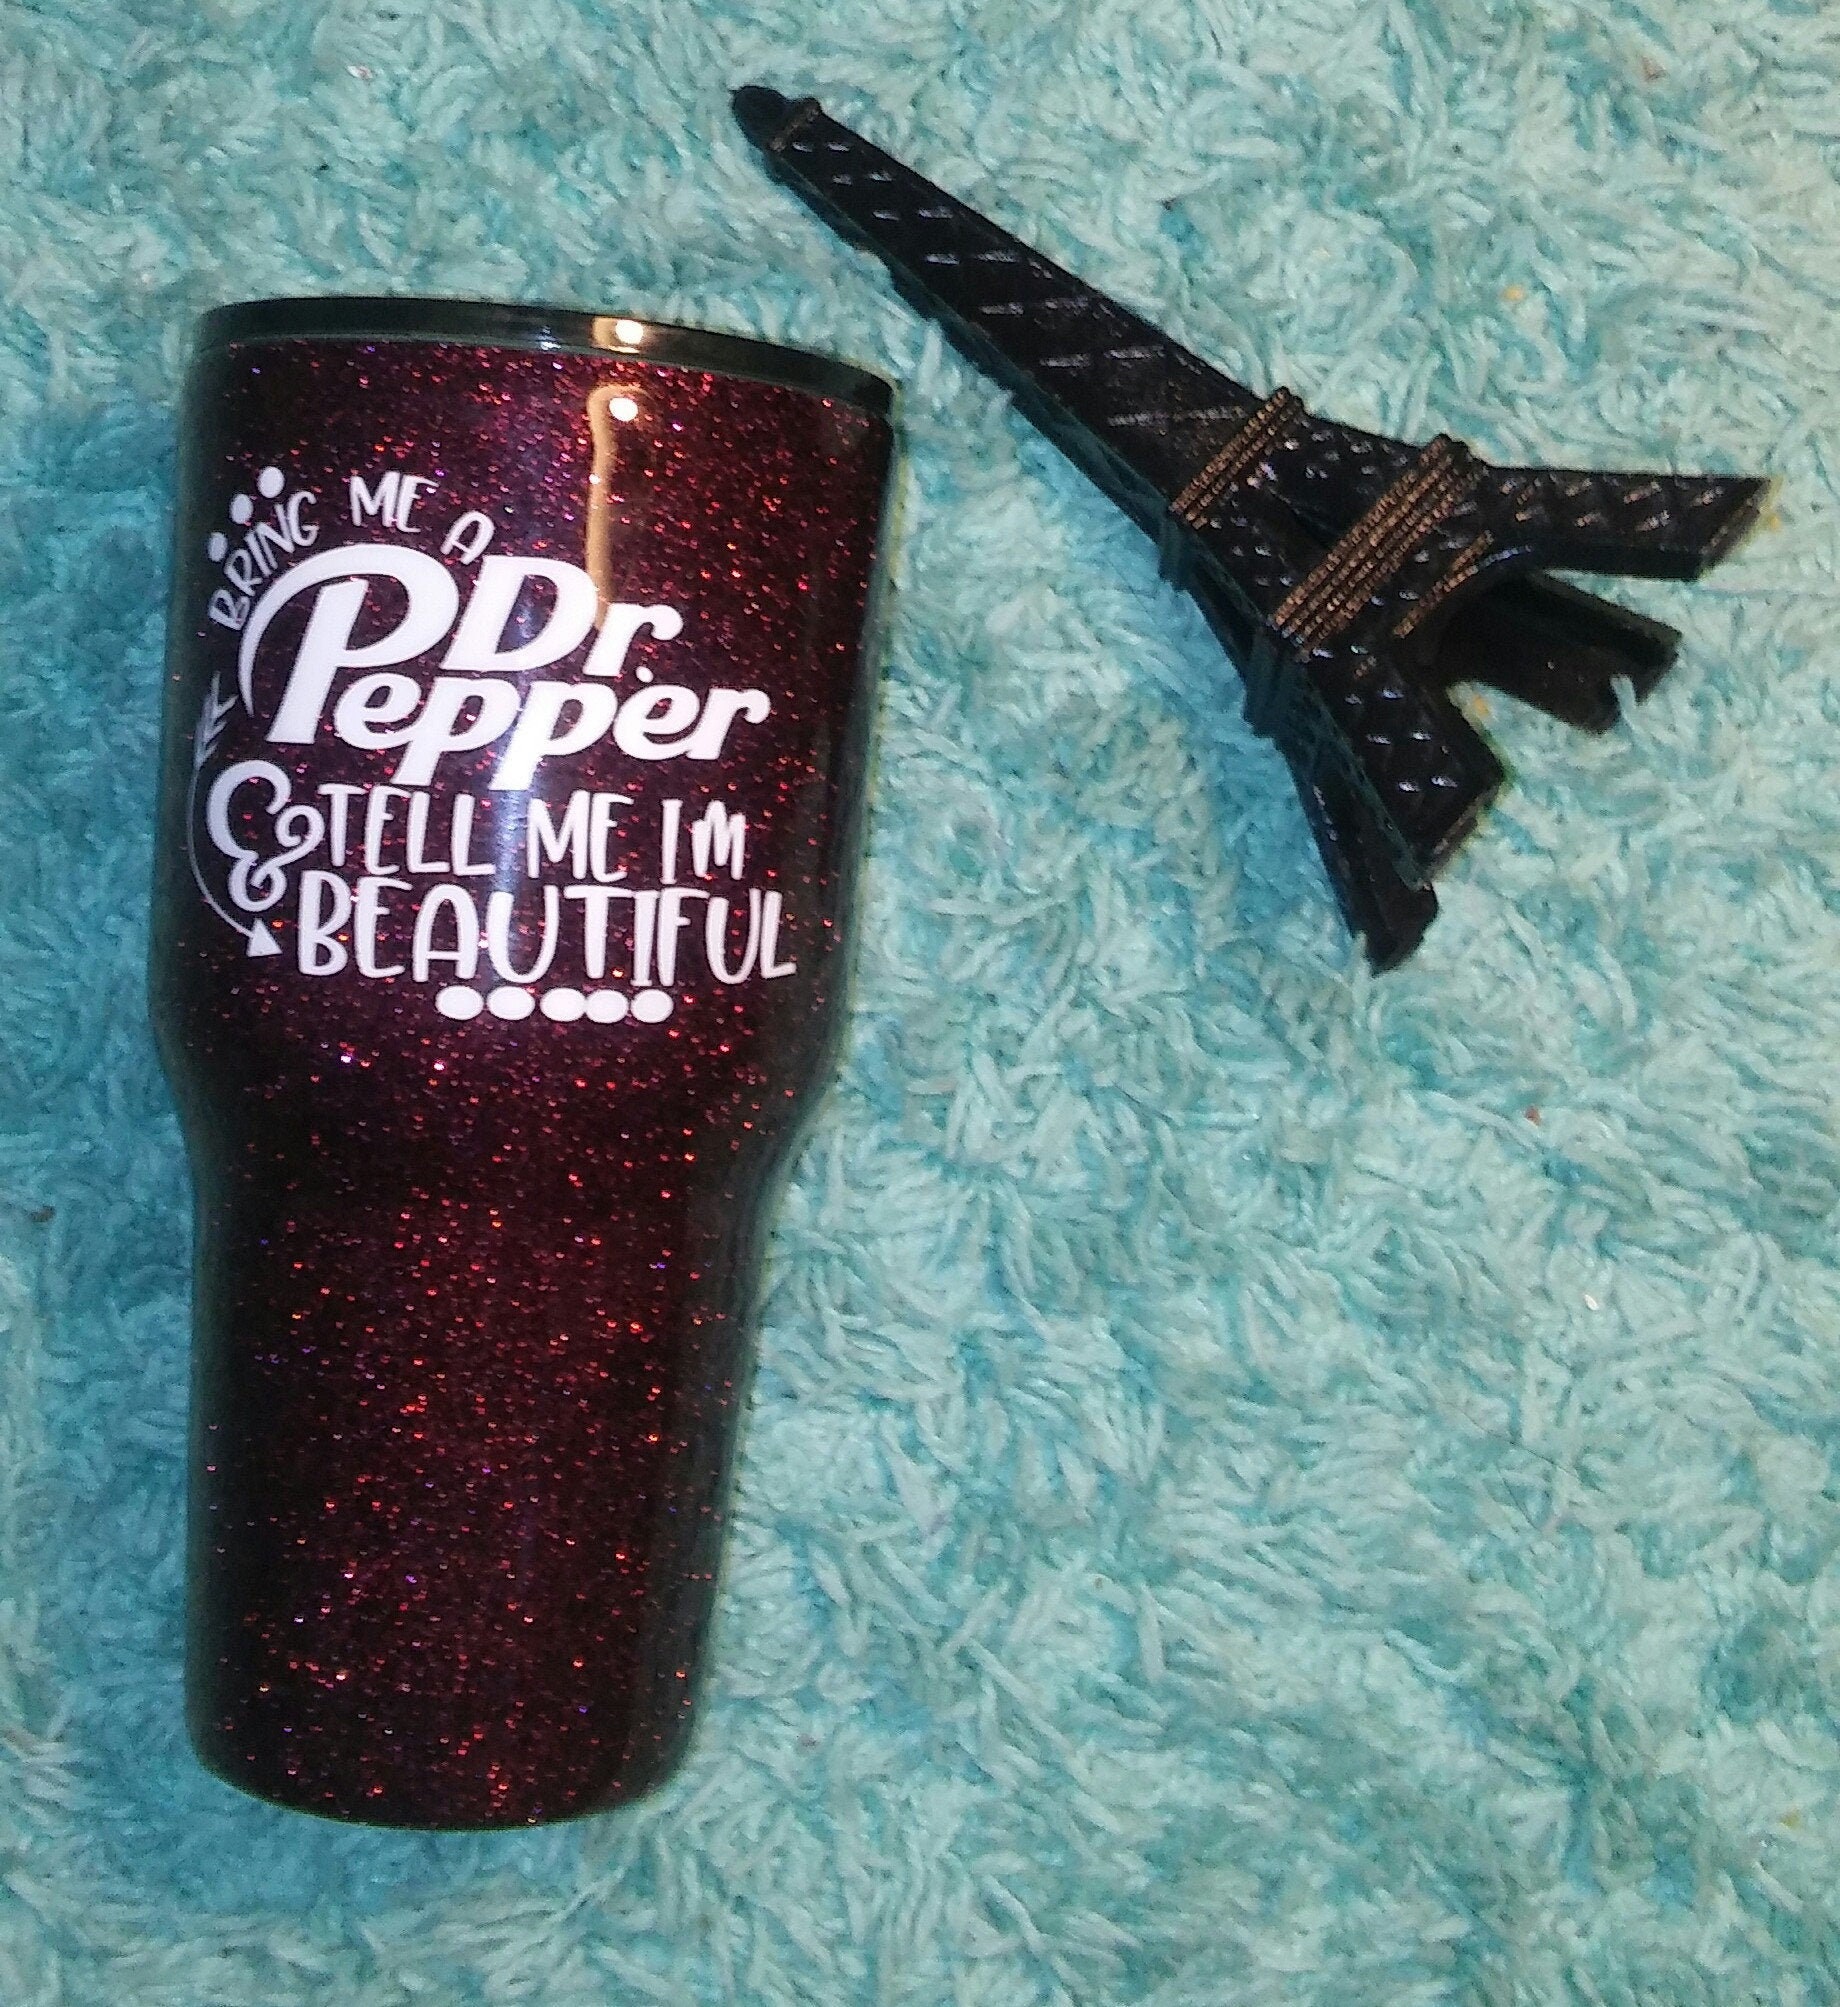 Dr. Pepper Tumbler/ Personalized Tumbler/ Glitter Tumbler/